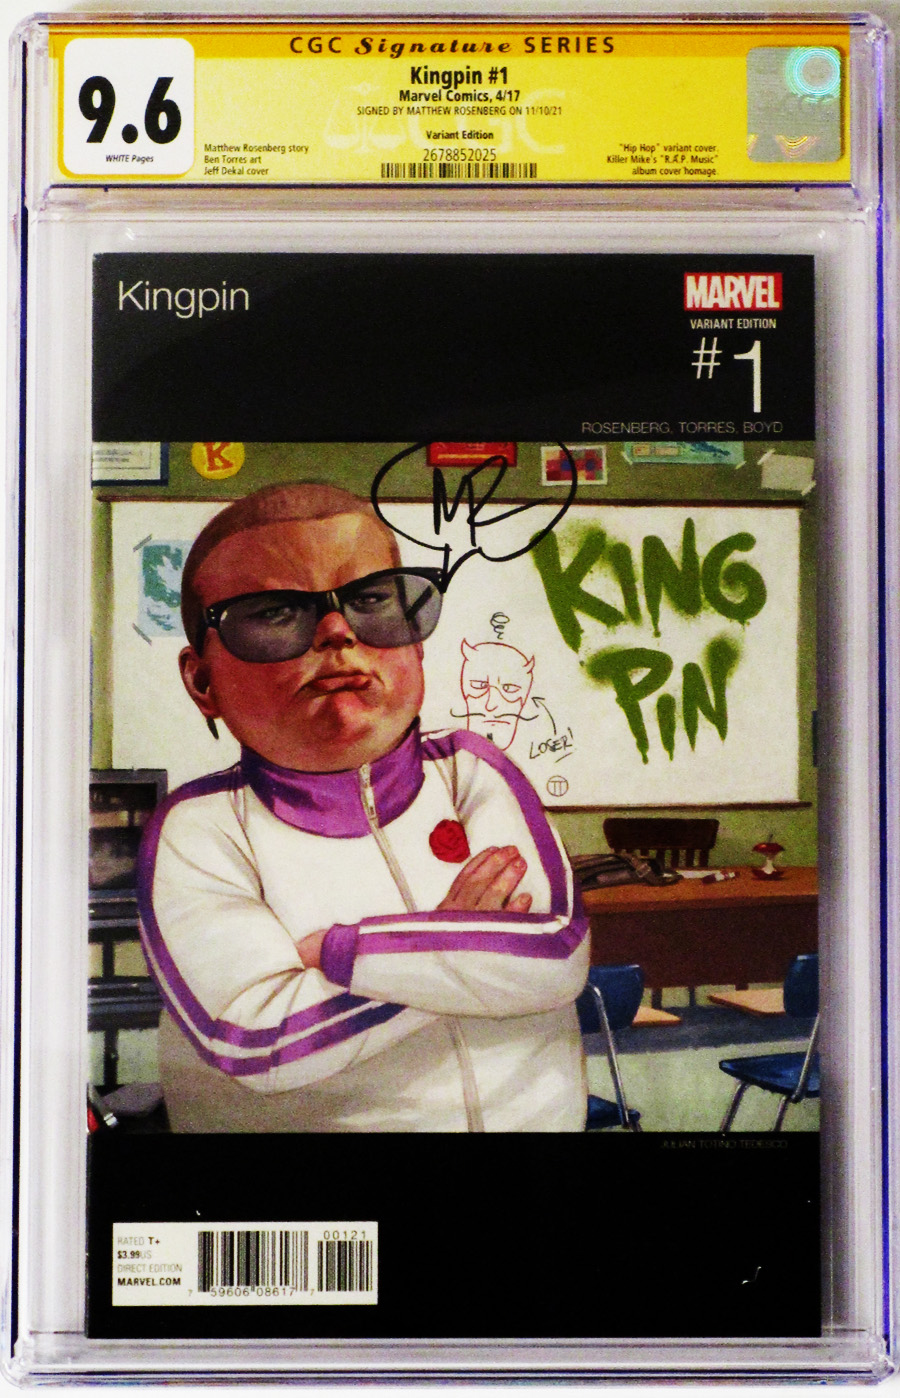 Kingpin Vol 2 #1 Cover I Variant Julian Totino Tedesco Marvel Hip-Hop Cover Signed By Matthew Rosenberg CGC 9.6